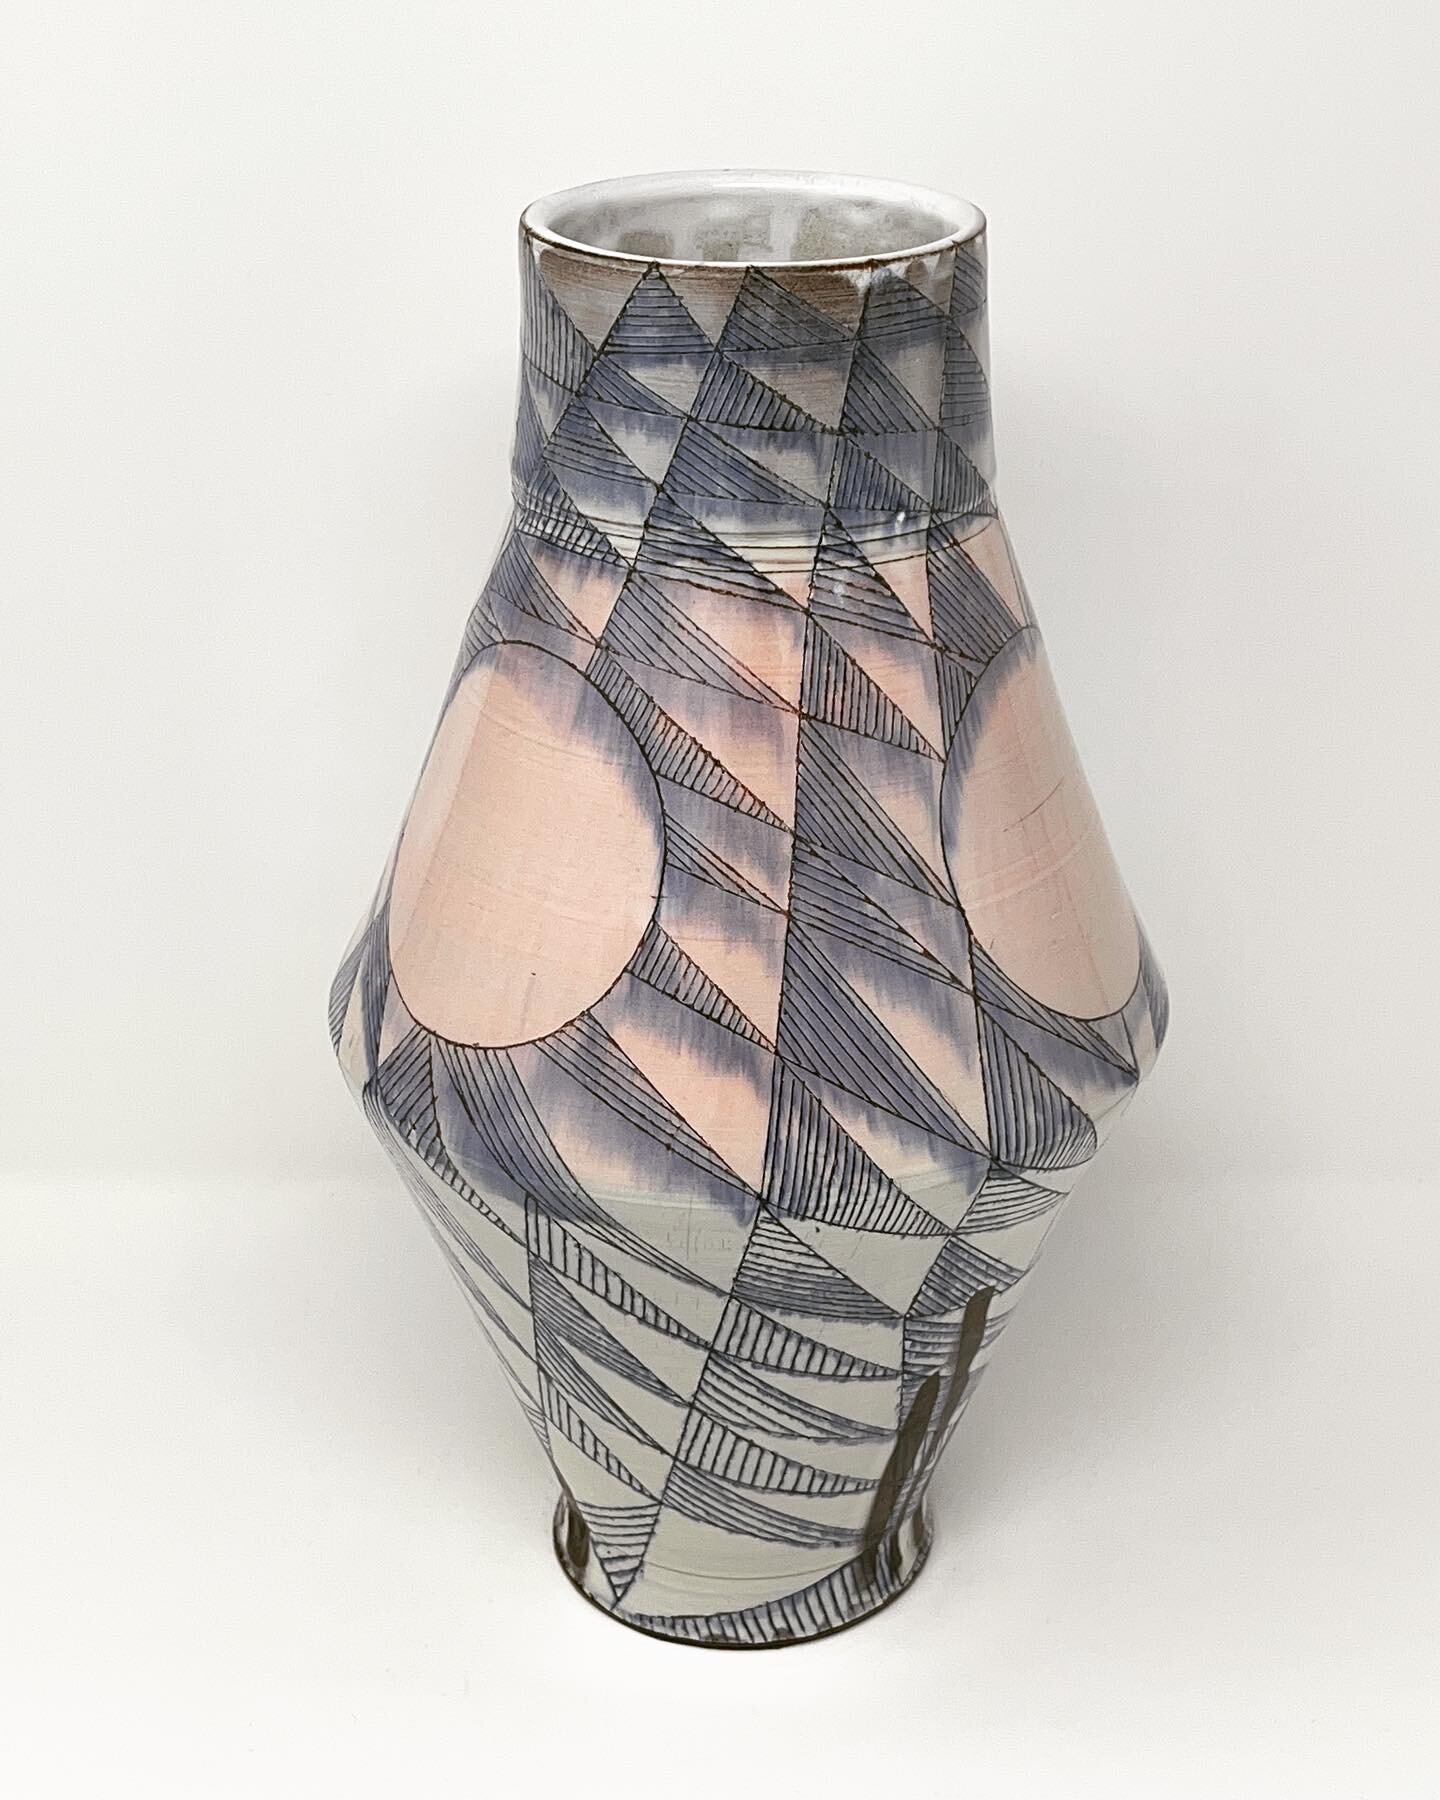 The vases thus far. Have a great Thursday.
#ceramics #pottery #azulejos #pink #flameorange #howiamaco #vase #pattern #blueandwhite